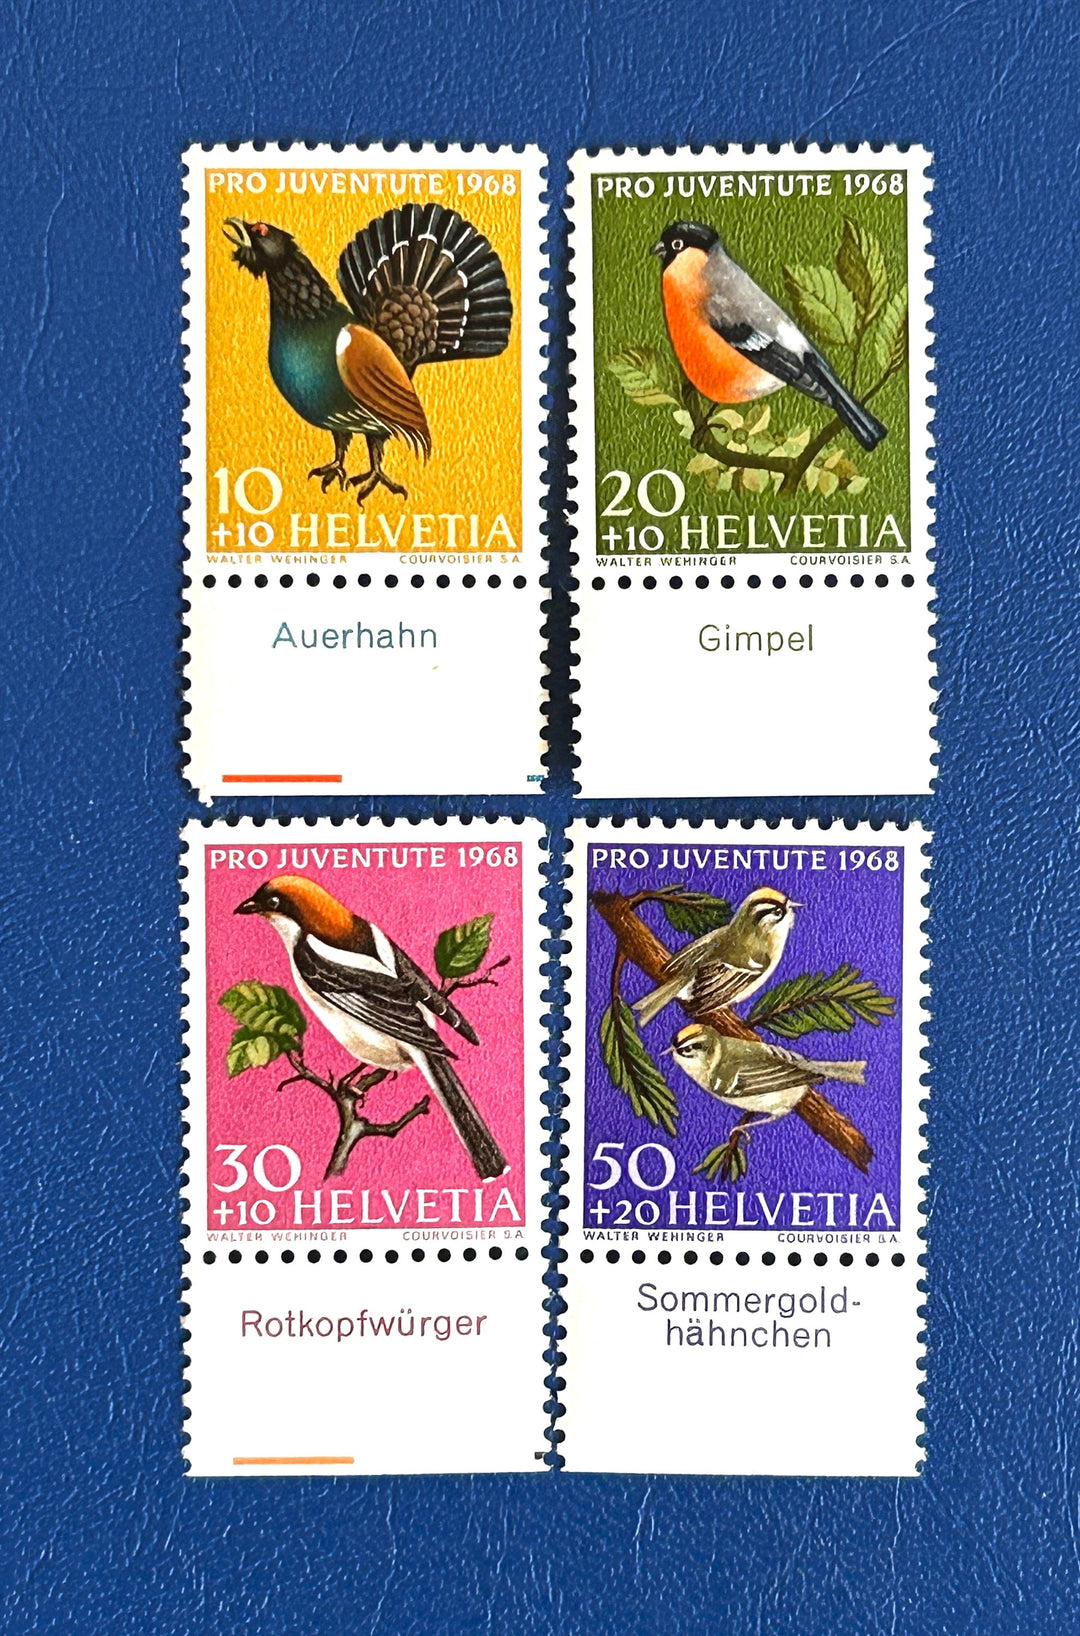 Switzerland - Original Vintage Postage Stamps- 1969 - Birds - for the collector, artist or crafter